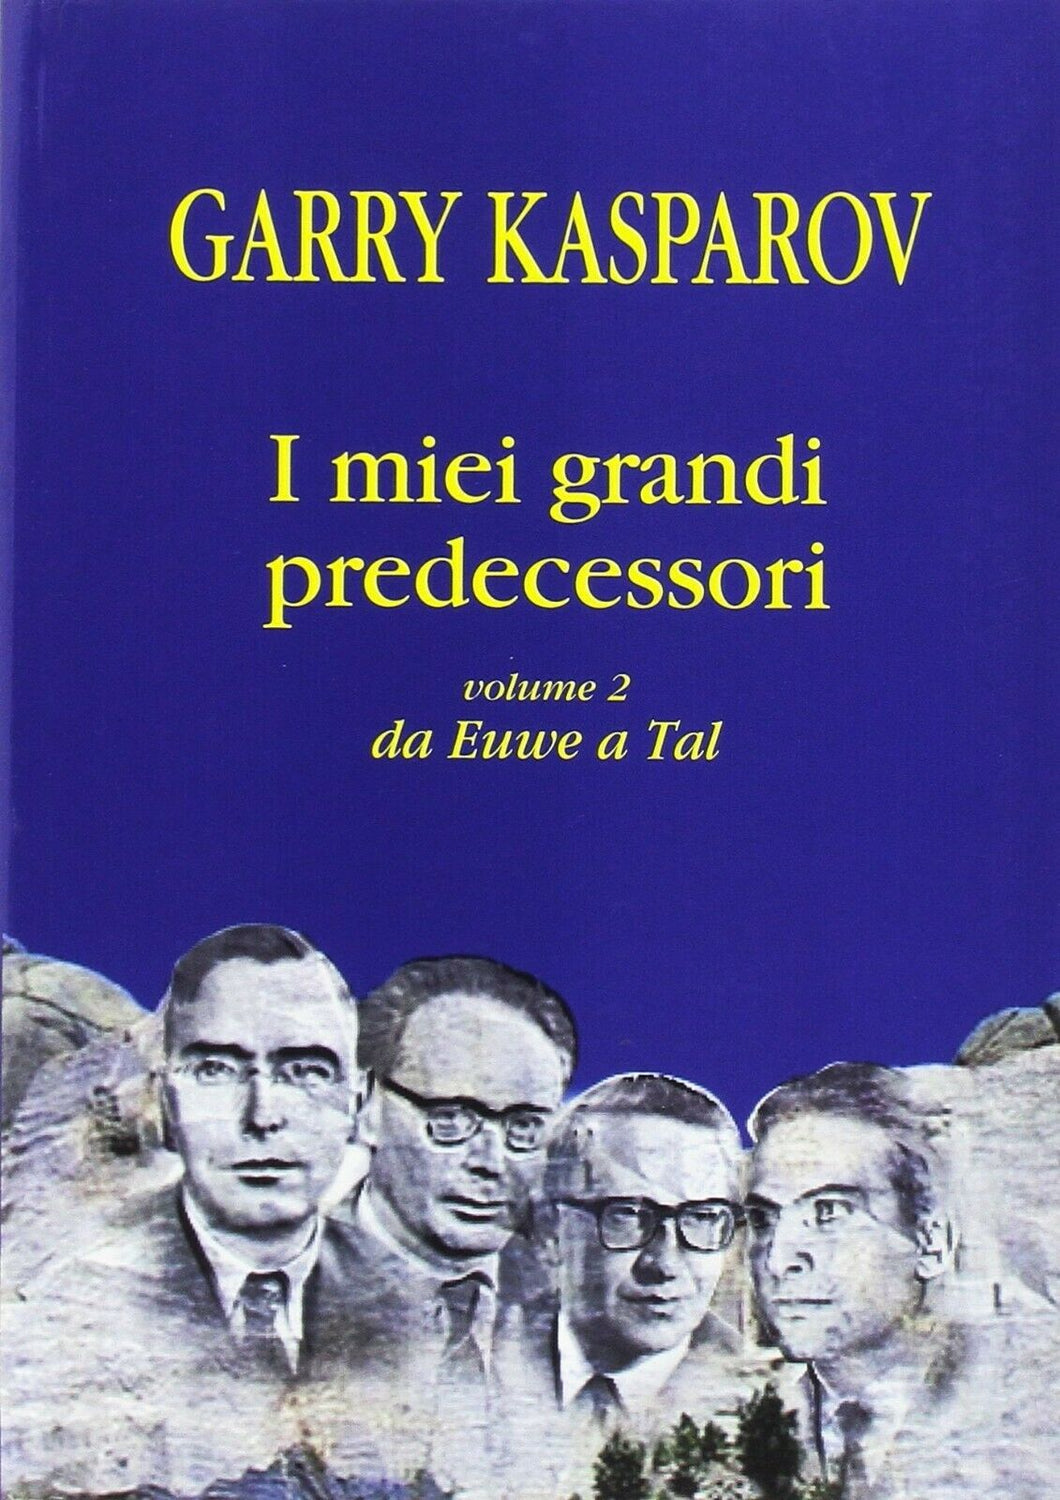 I miei grandi predecessori - Volume 2 da Euwe a Tal - Garry Kasparov